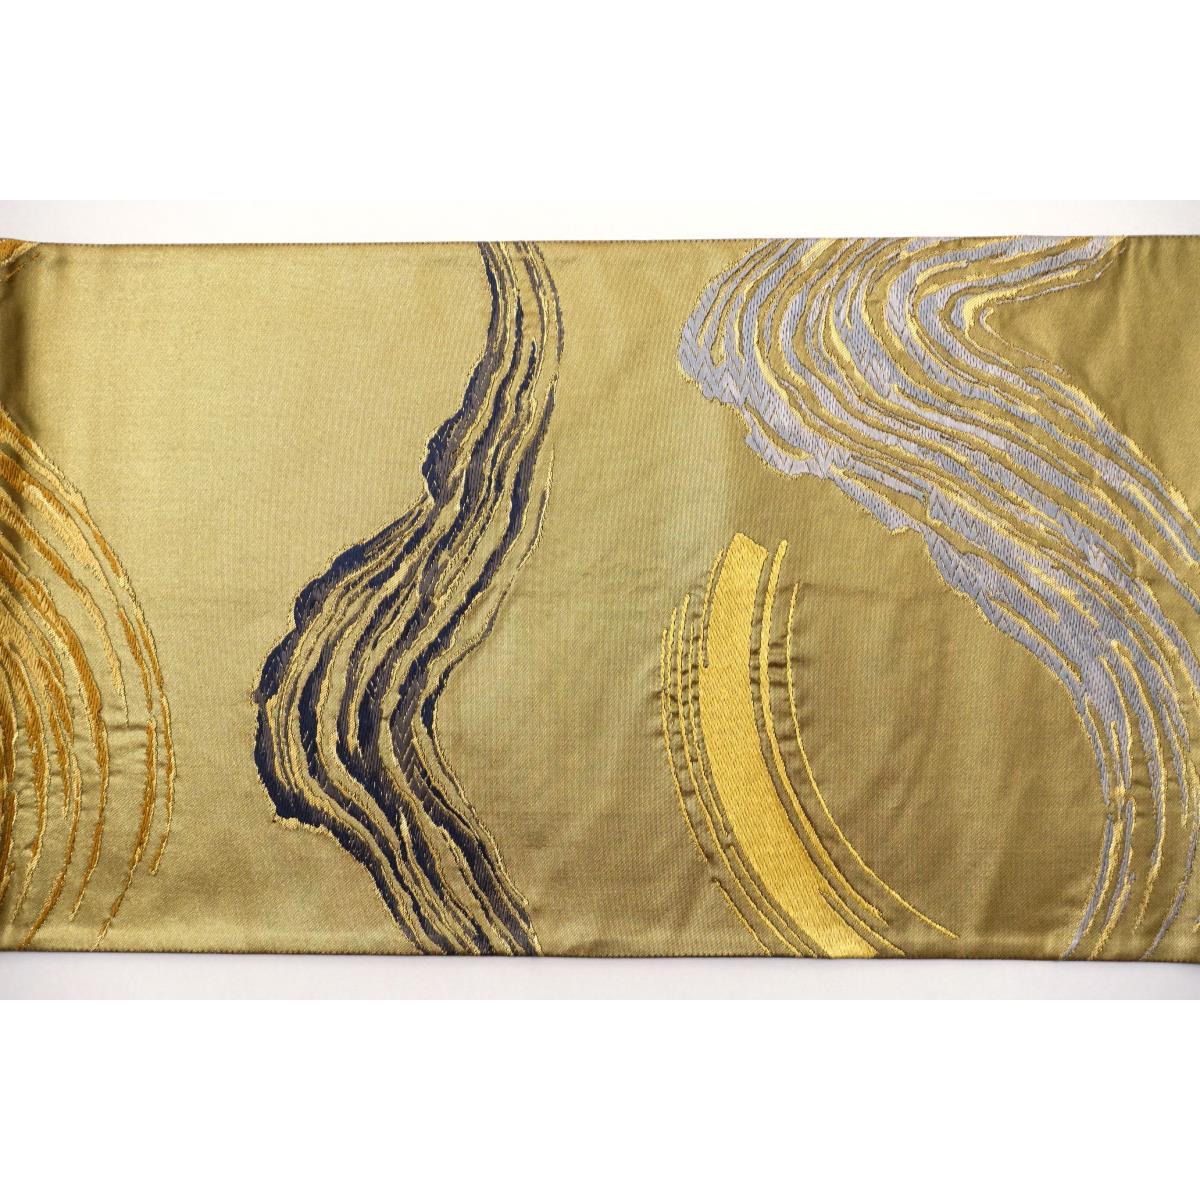 Fukuro obi Hasegawa textile